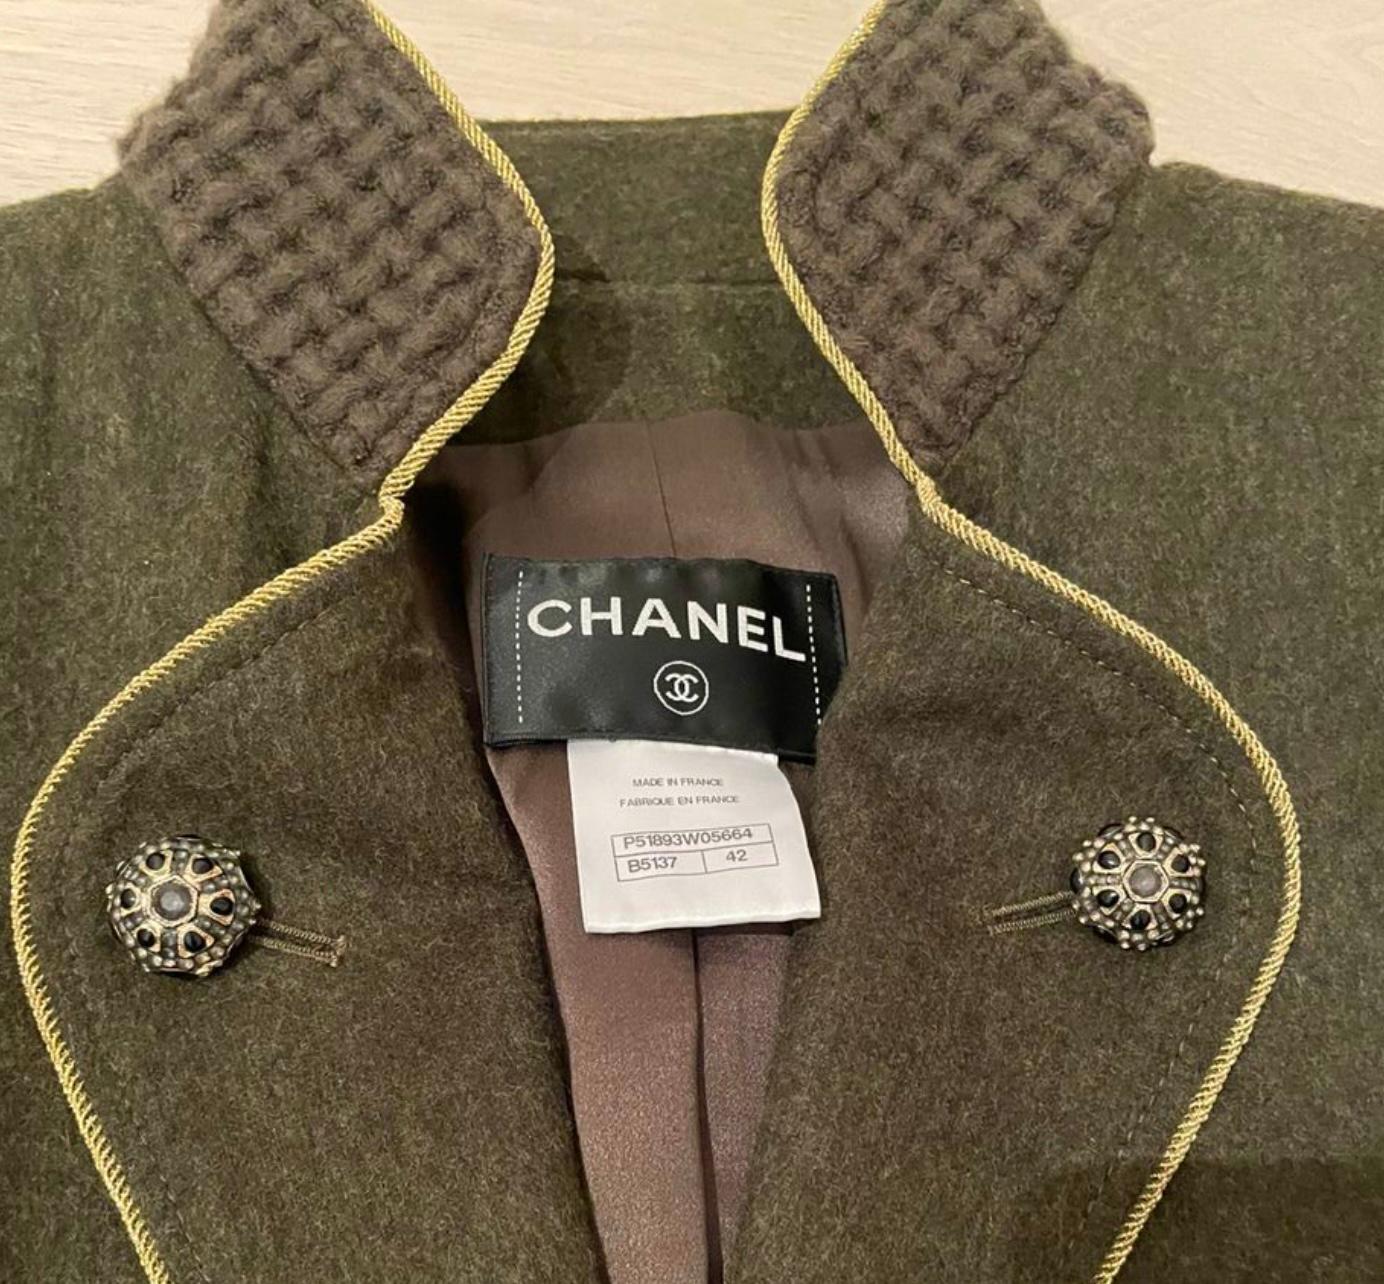 Chanel Kris Jenner Jewel Buttons Tweed Coat 6